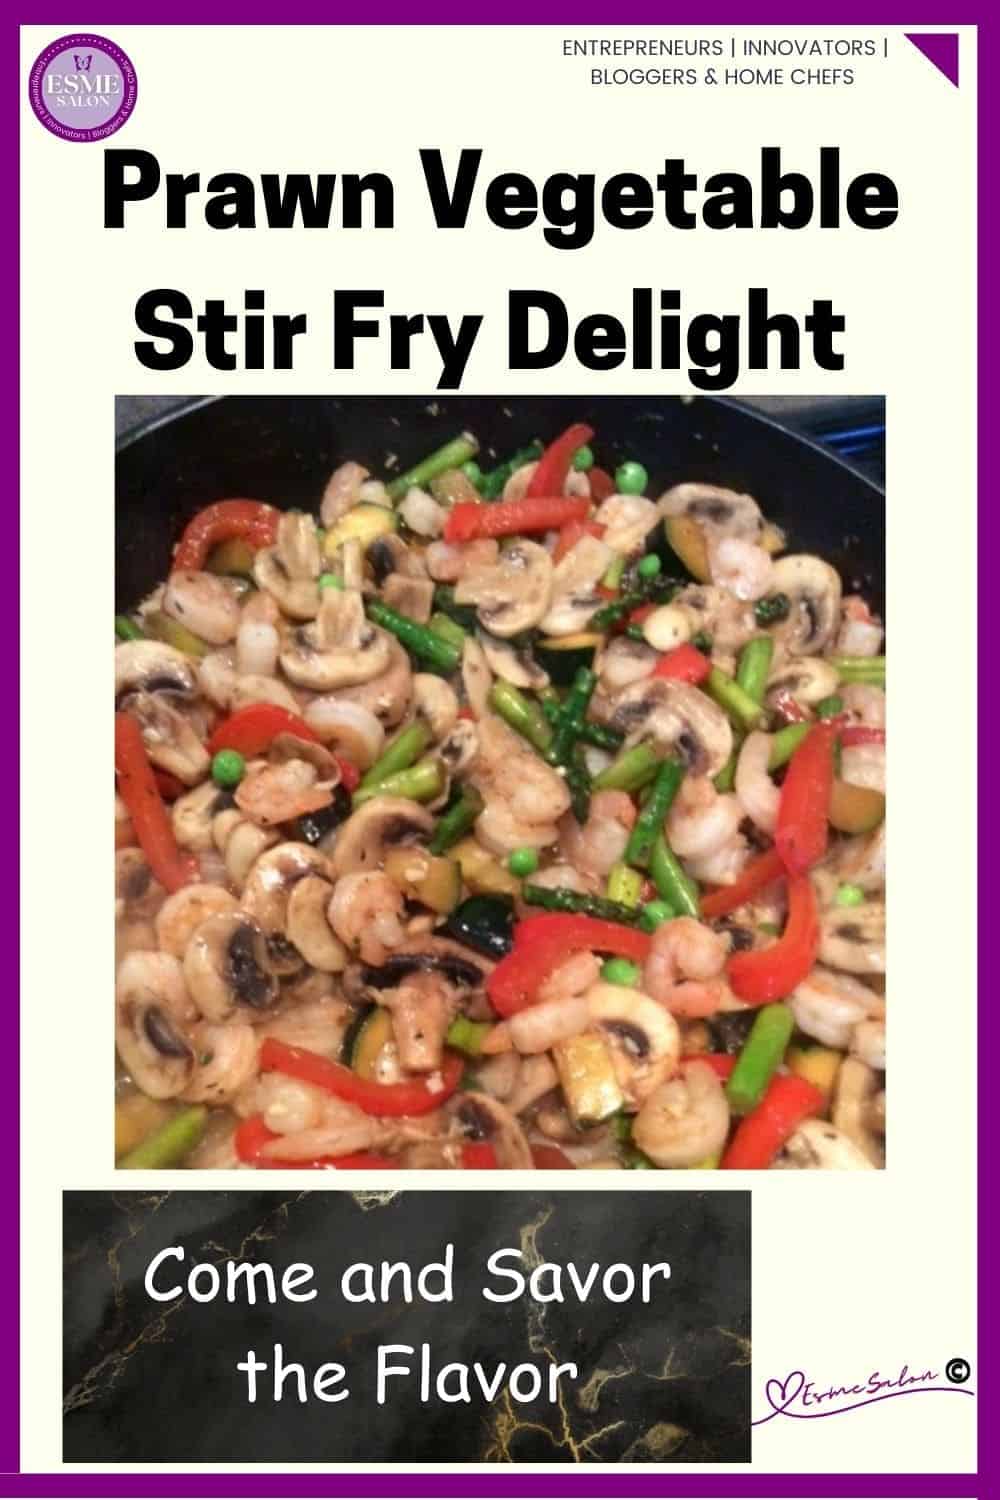 an image of a wok filled with Prawn Veggie Stir Fry